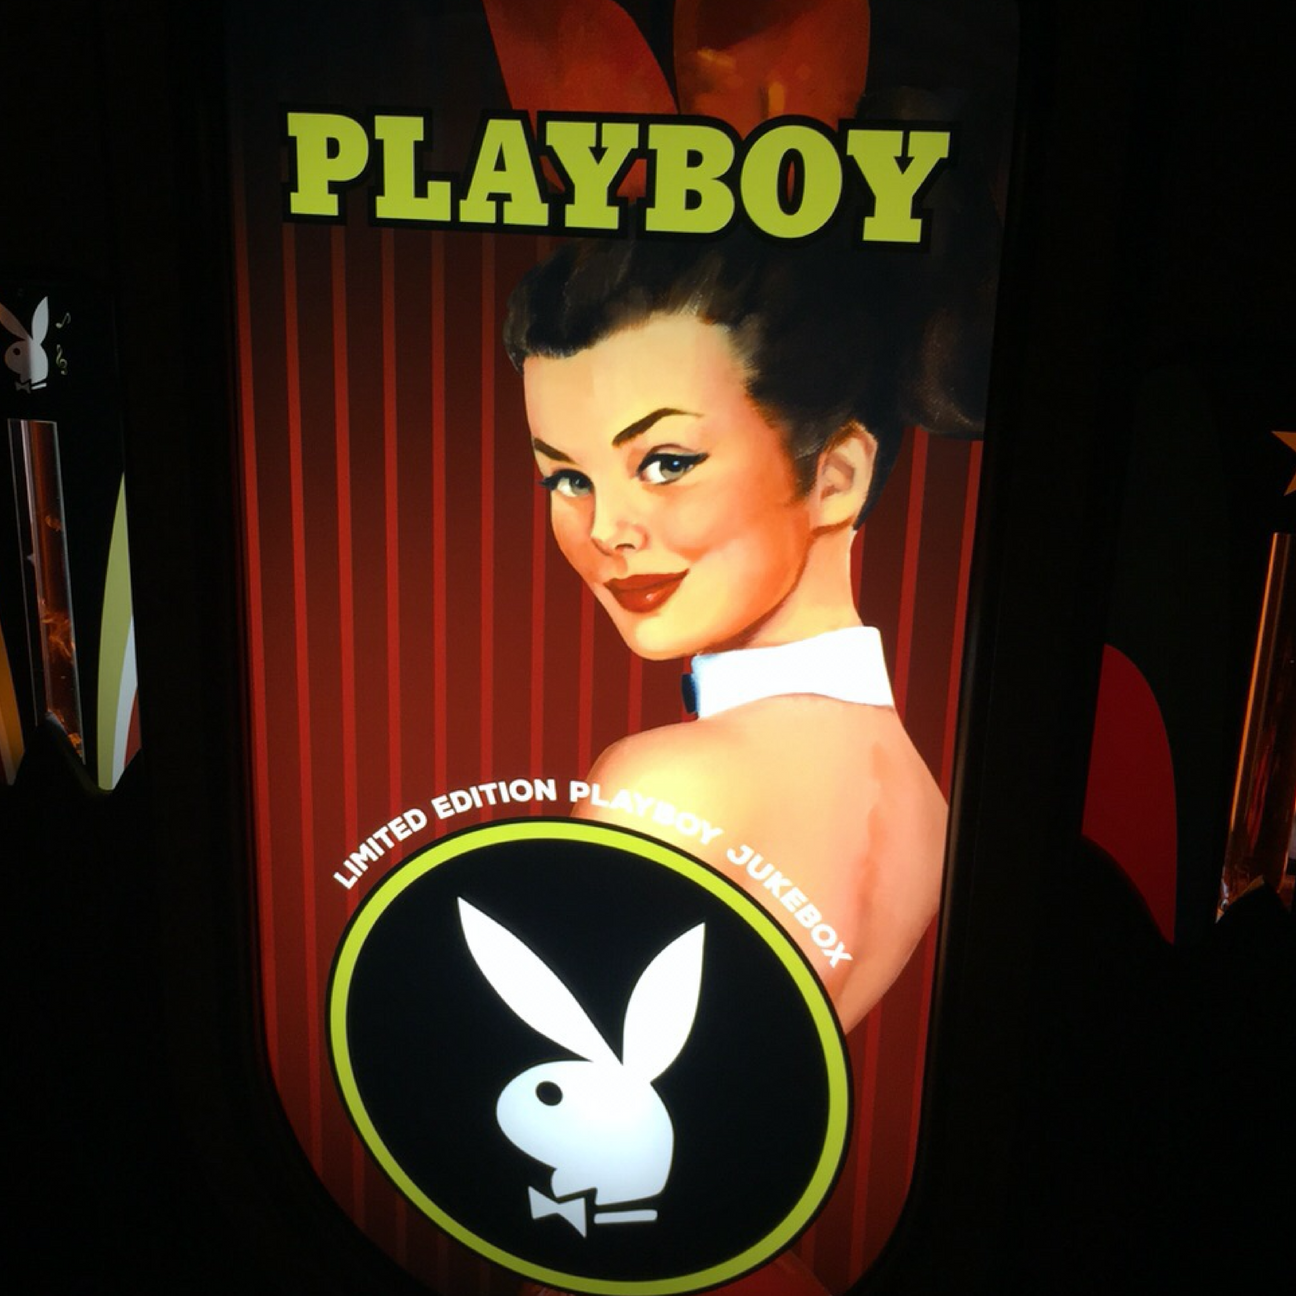 Playboy Vinyl 45 Rock-Ola Bubbler Limited Edition Jukebox with Bluetooth